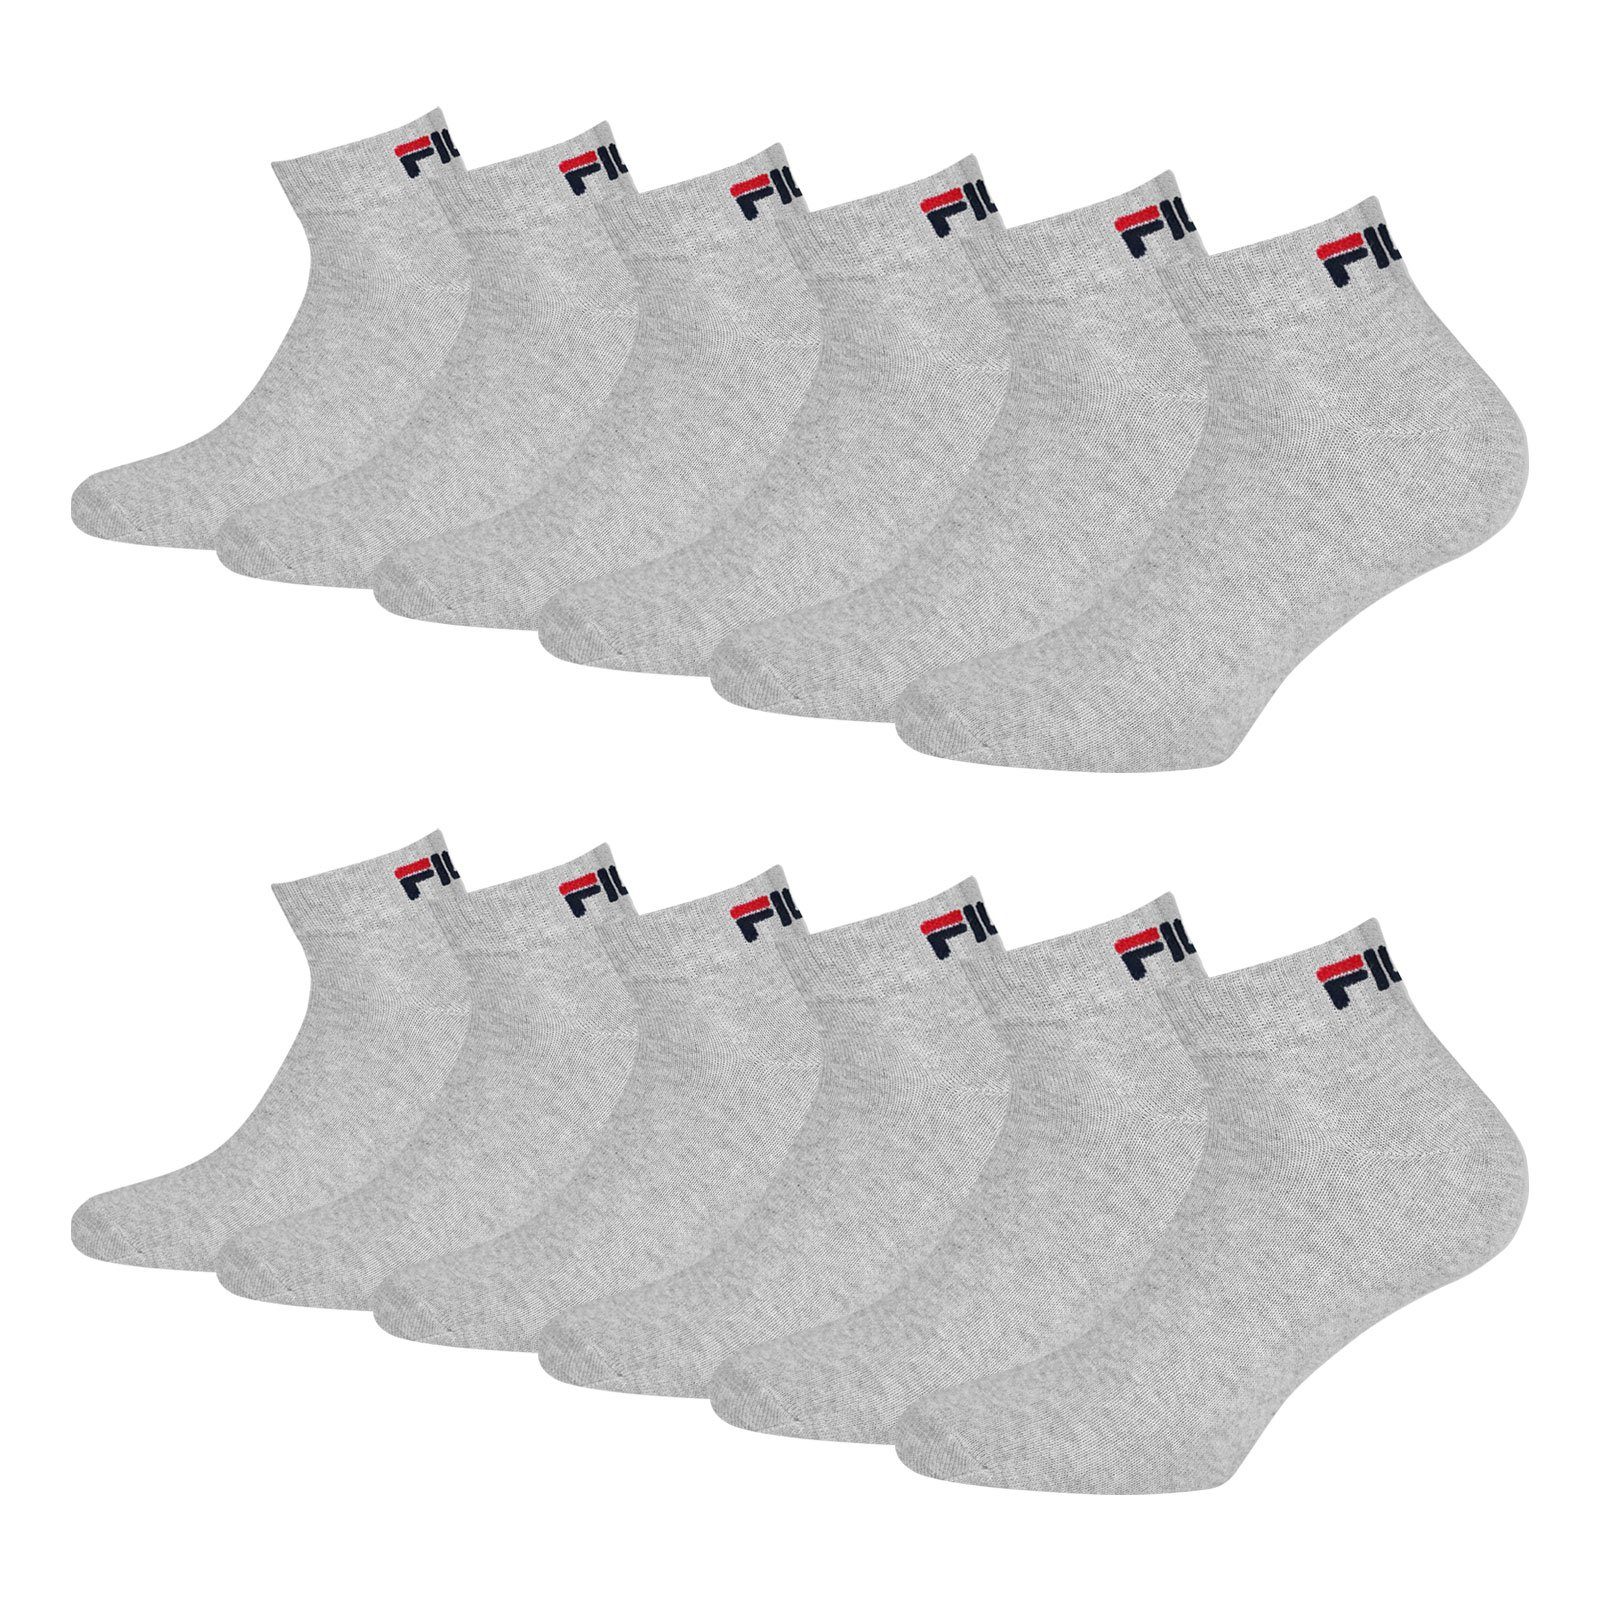 weichem Sportsocken (6-Paar) Quarter Socken Fila Rippbündchen mit